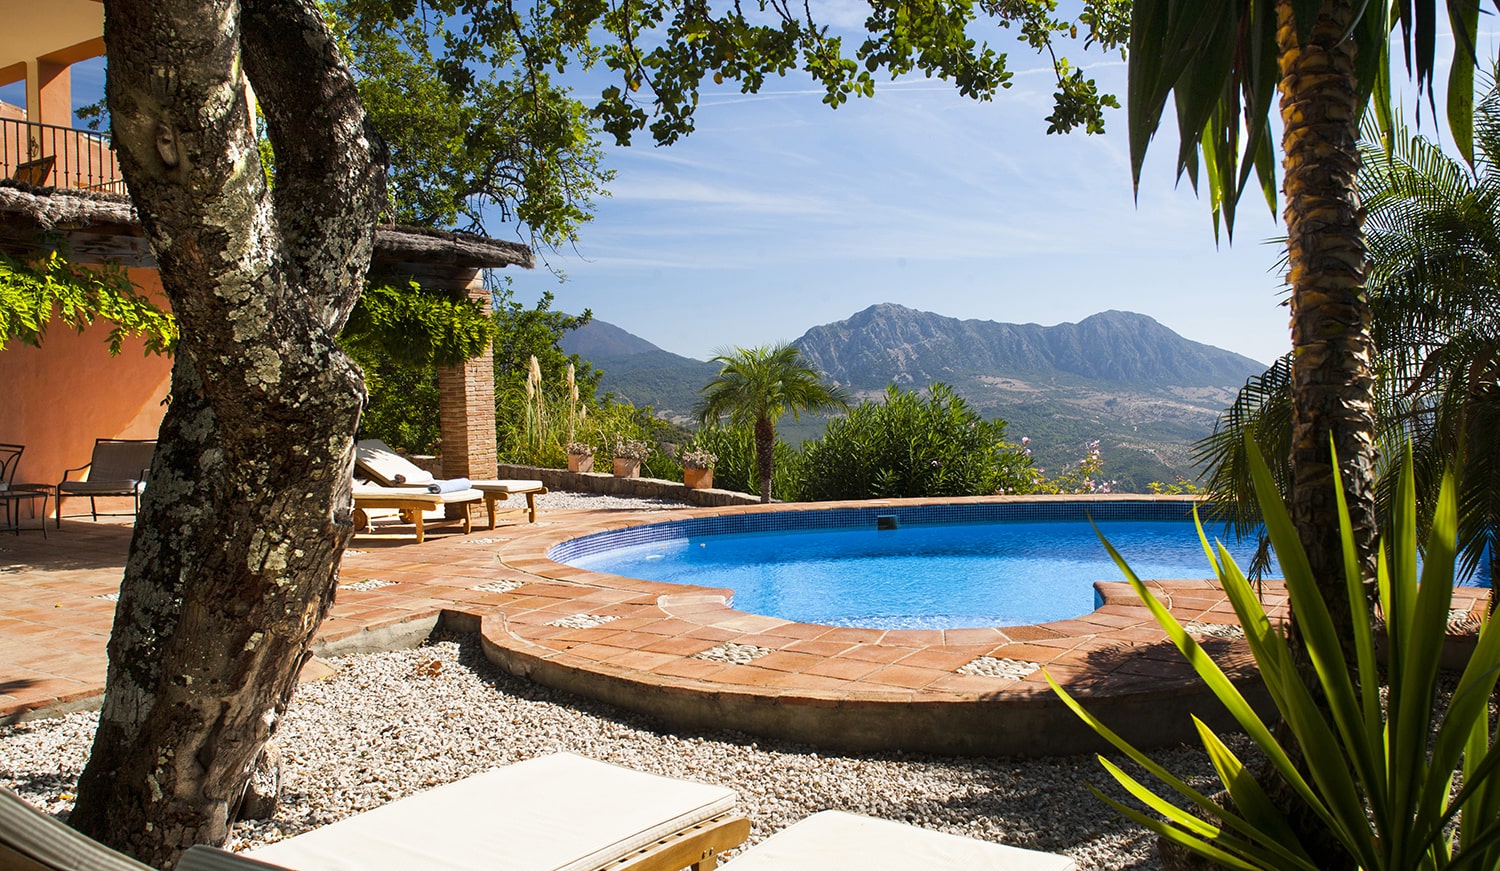 swimming pool and garden luxury villa spain